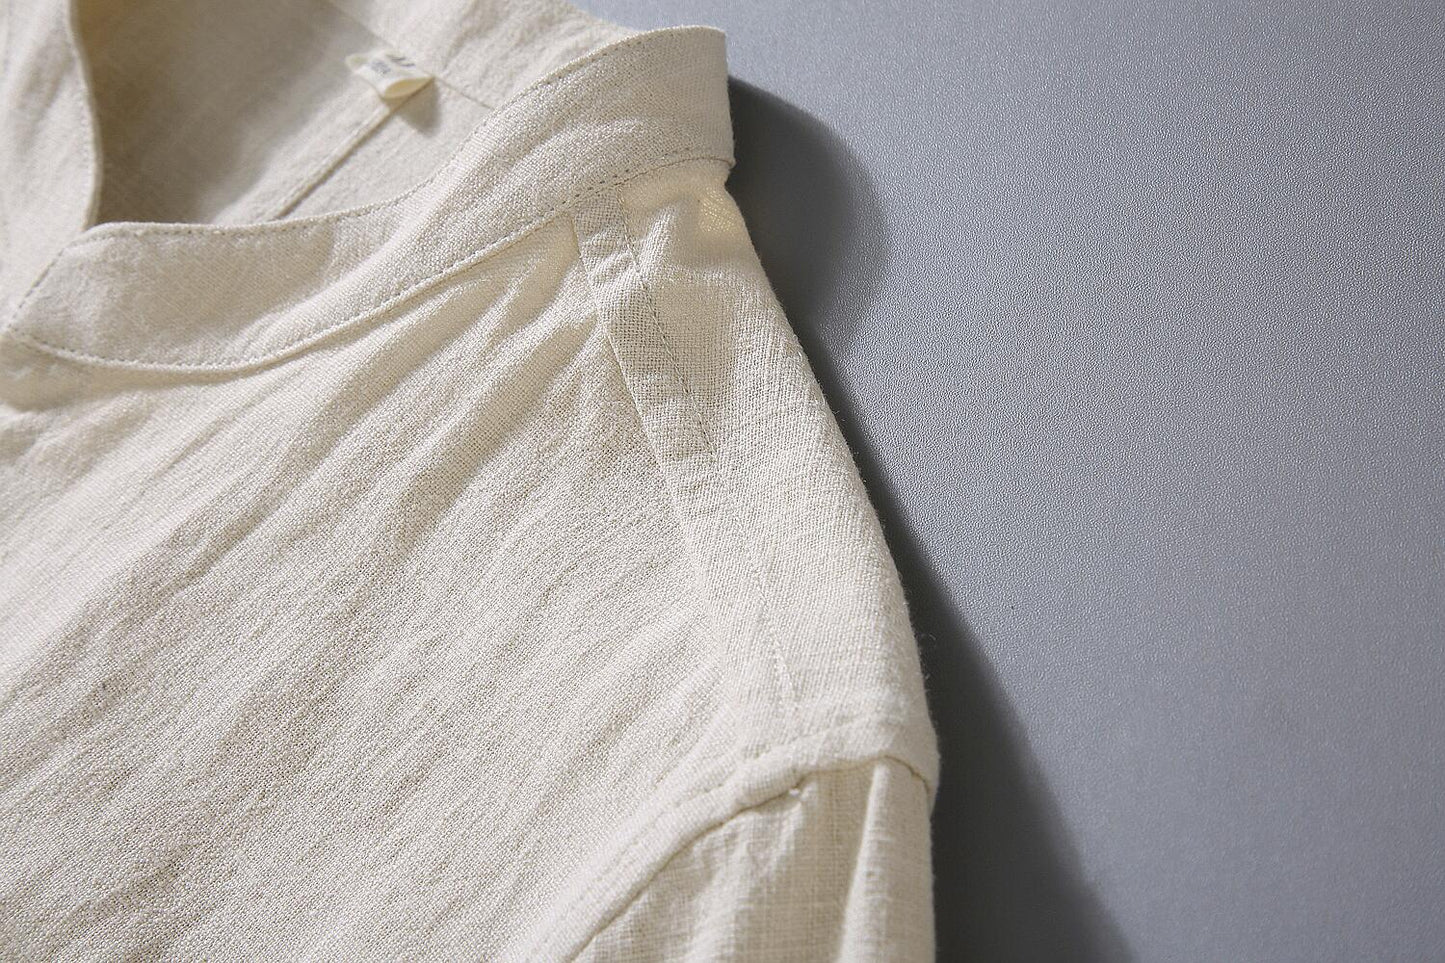 Men's Vintage Loose Fit Linen Shirt - Stand Collar